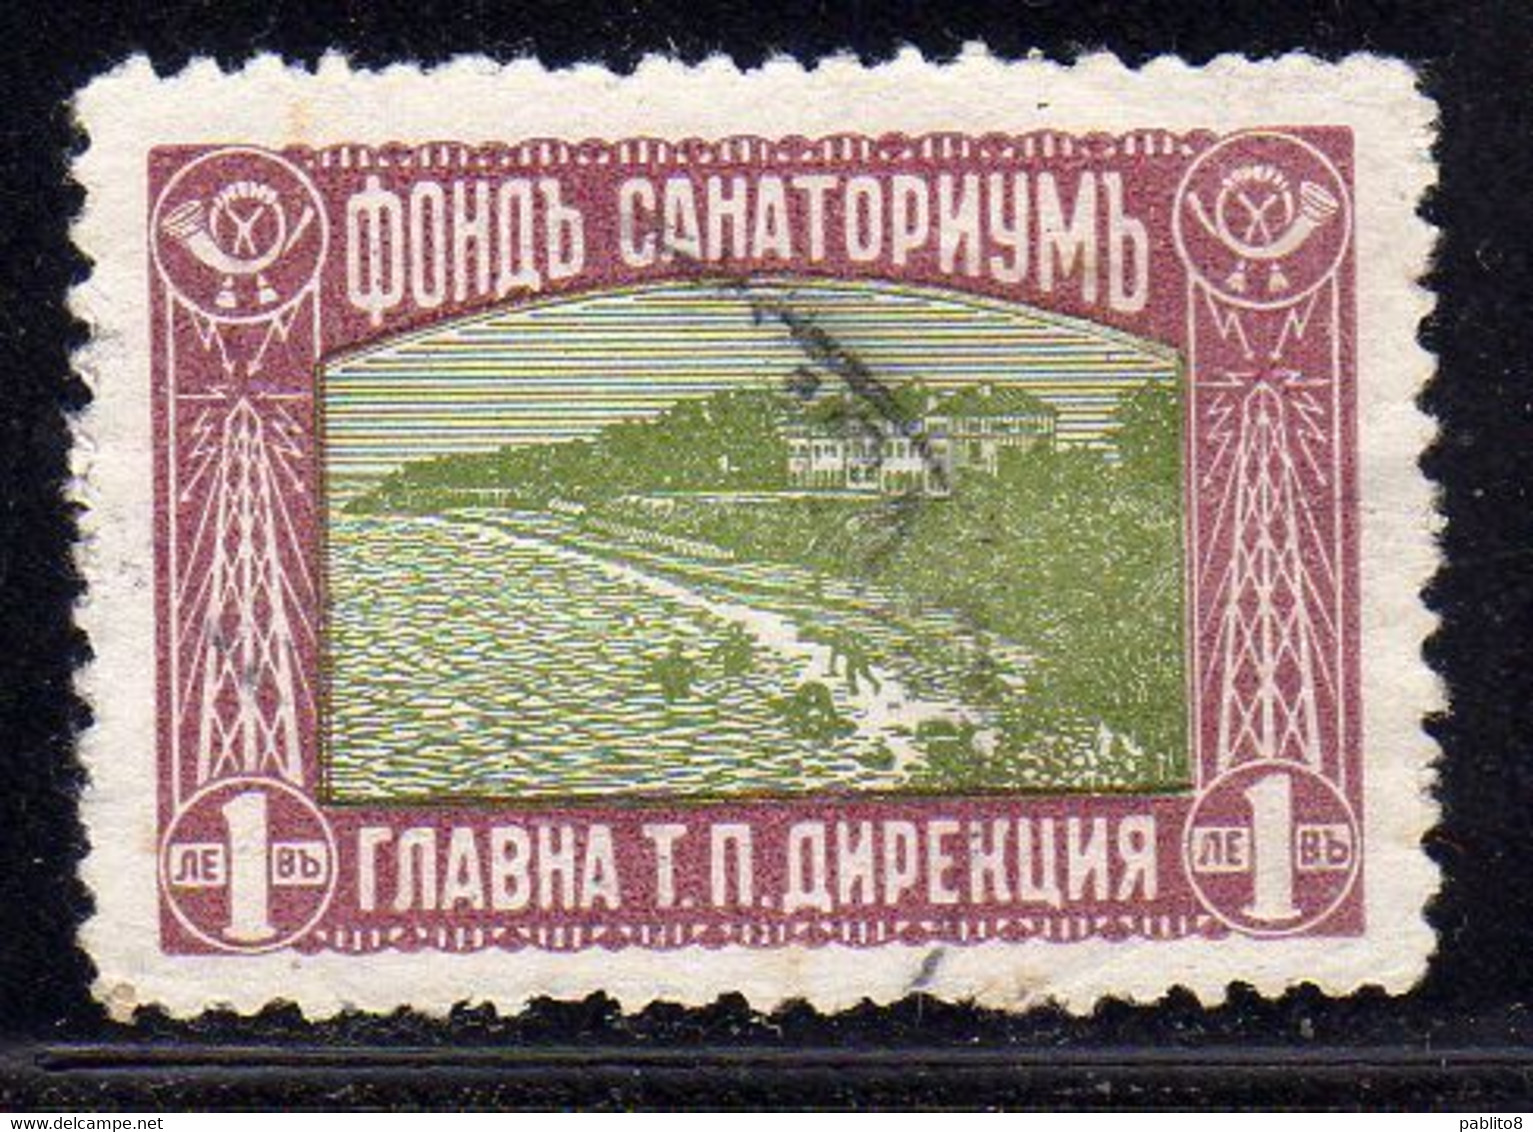 BULGARIA BULGARIE BULGARIEN 1930 1933 POSTAL TAX STAMPS ST CONSTANTINE SANATORIUM 1L USED USATO OBLITERE' - Portomarken